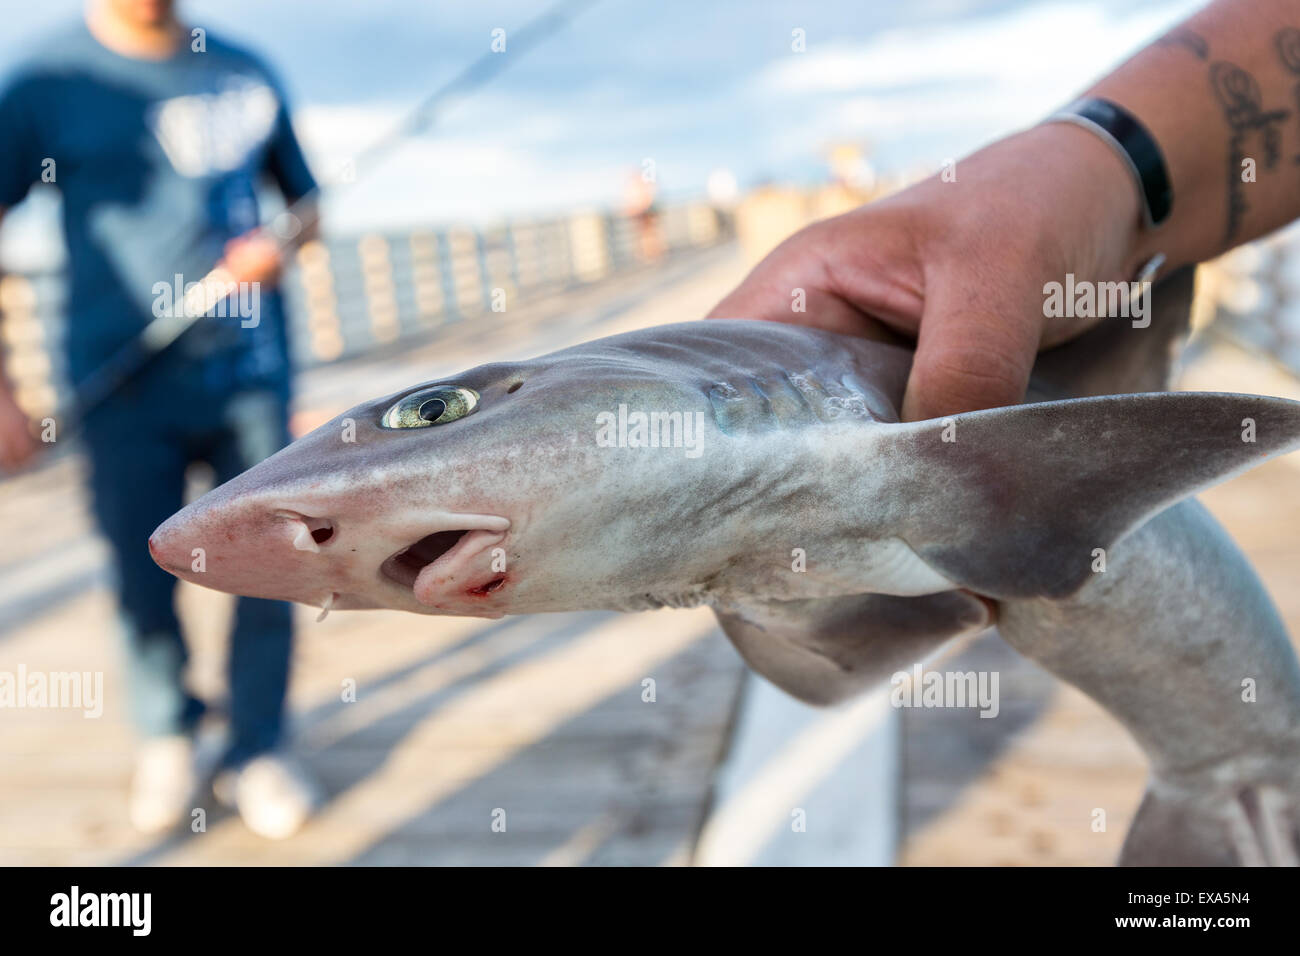 https://c8.alamy.com/comp/EXA5N4/fisherman-catches-a-baby-shark-on-a-jacksonville-florida-fishing-pier-EXA5N4.jpg